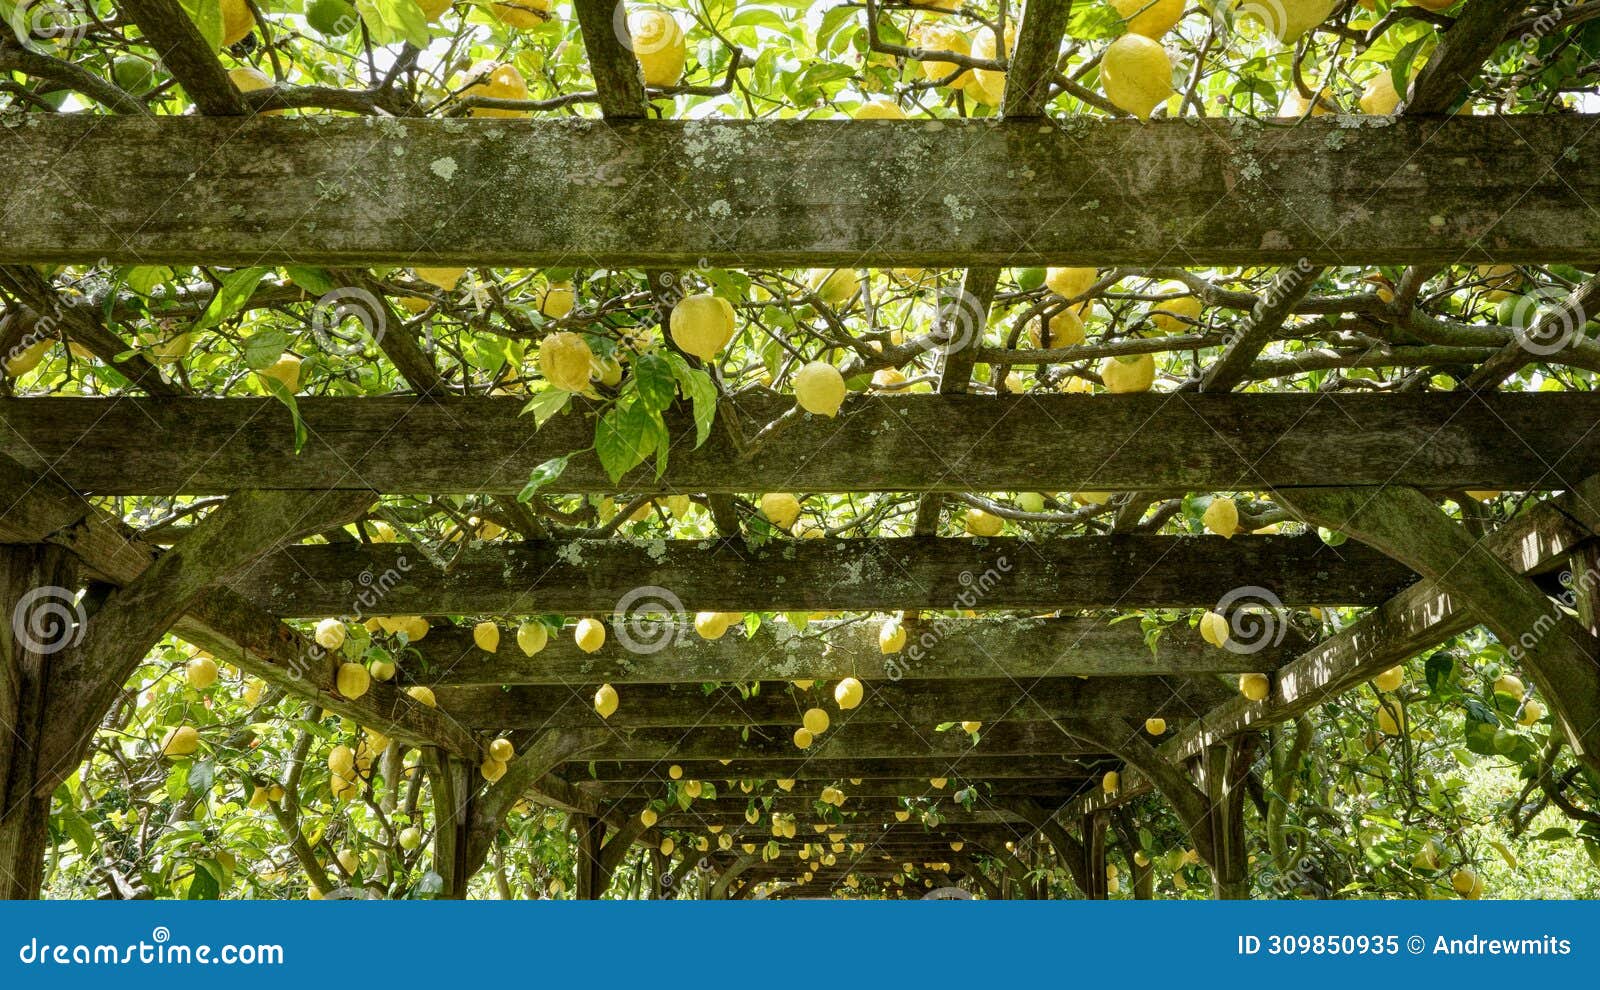 garden arbor with yellow lemons on latticework